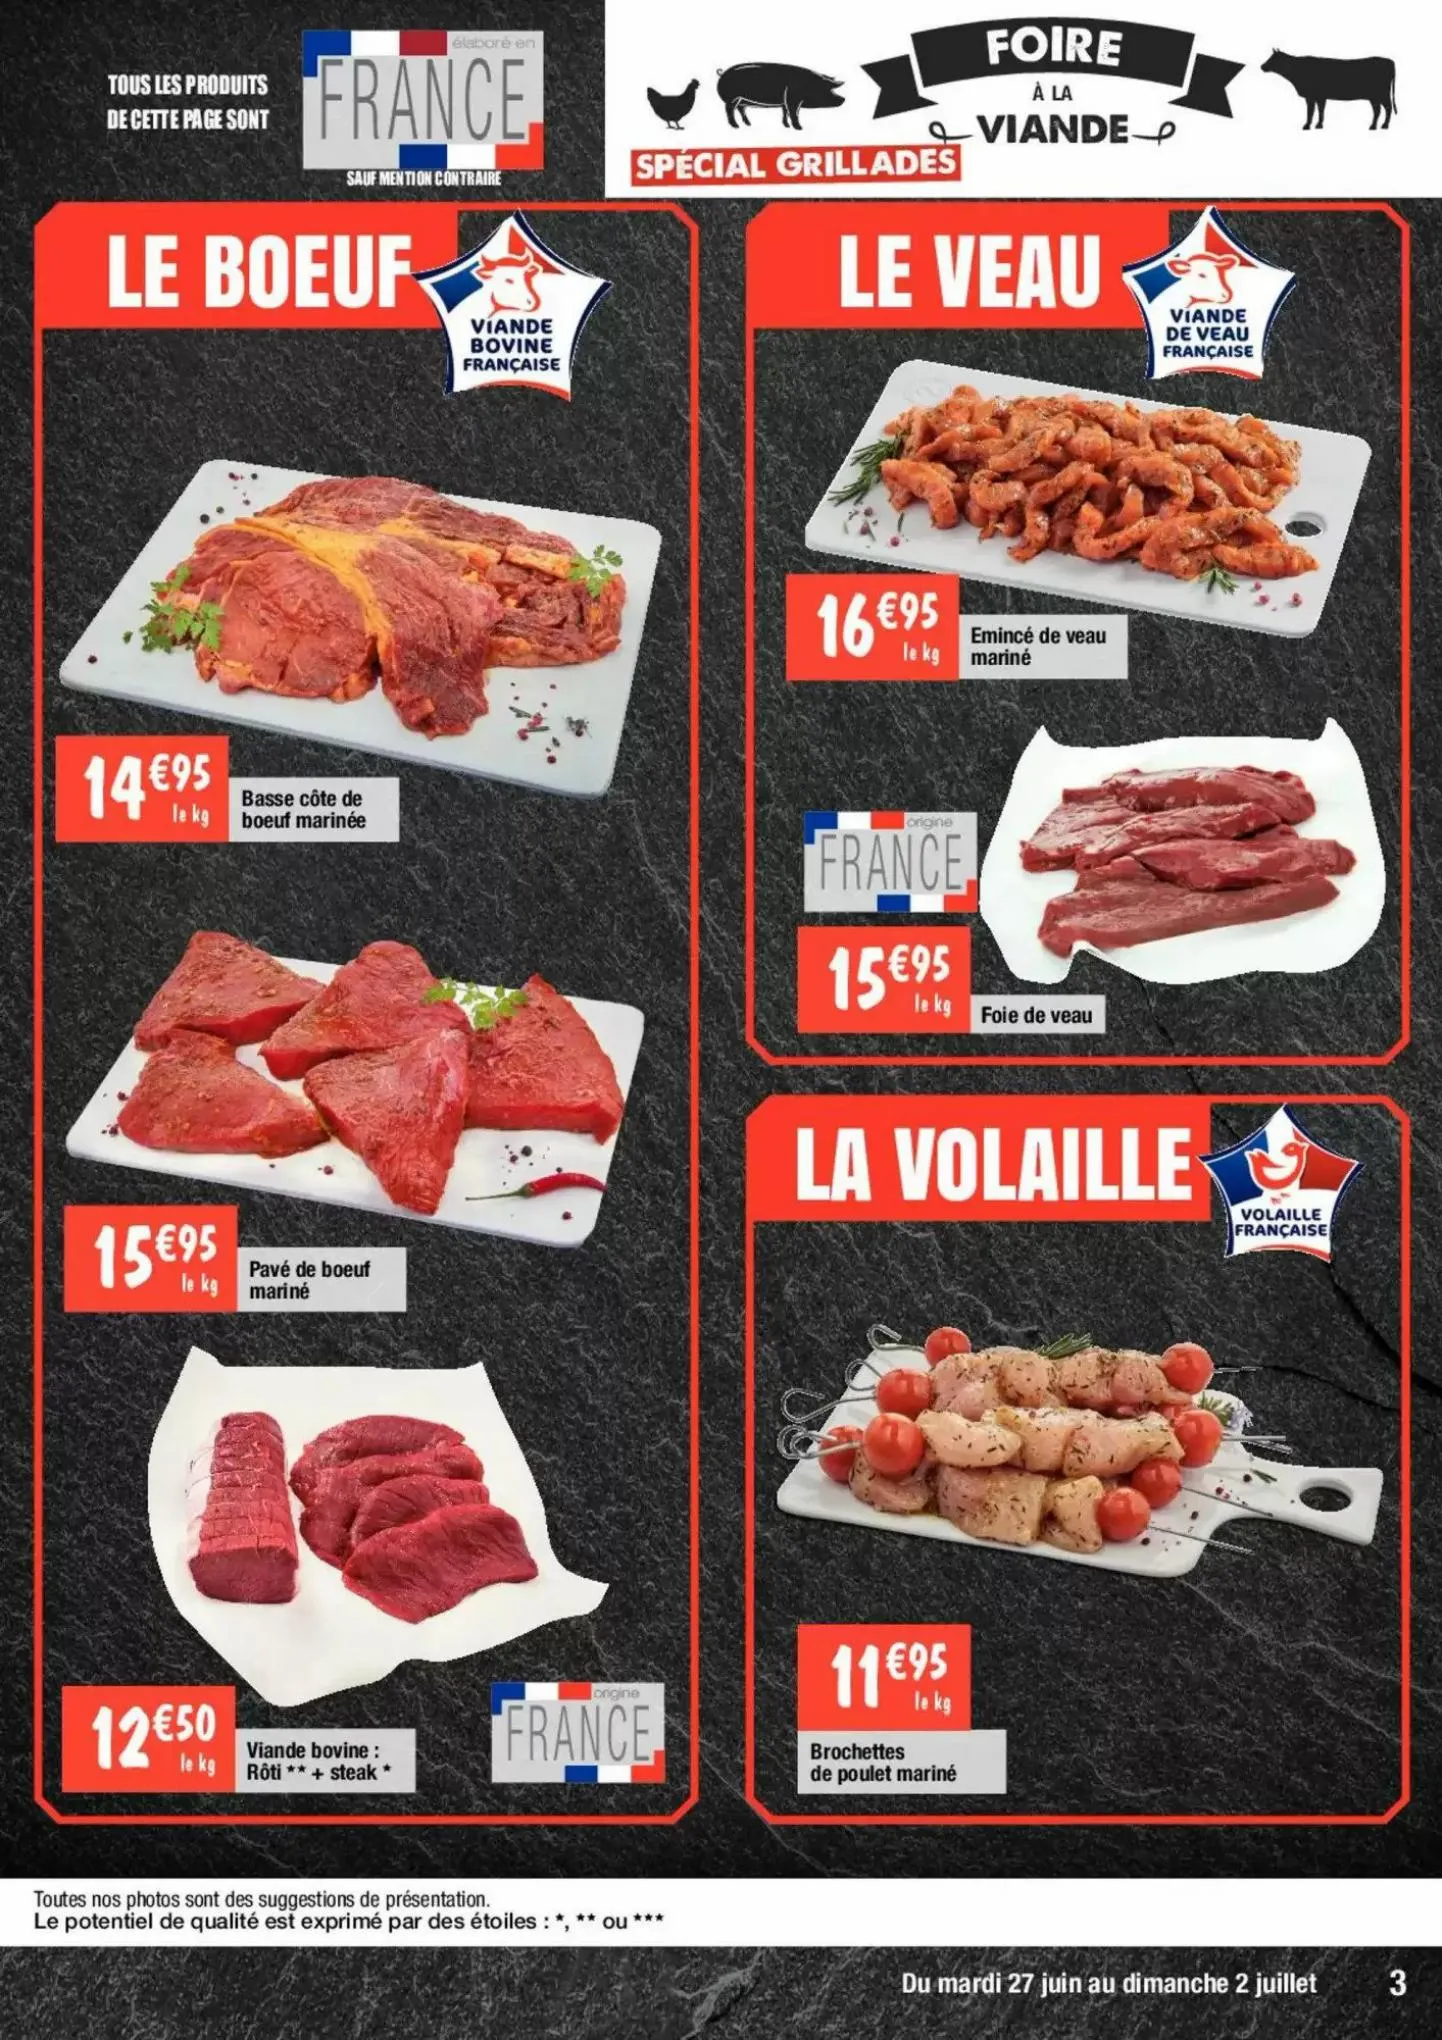 Catalogue Foire a la viande!, page 00003